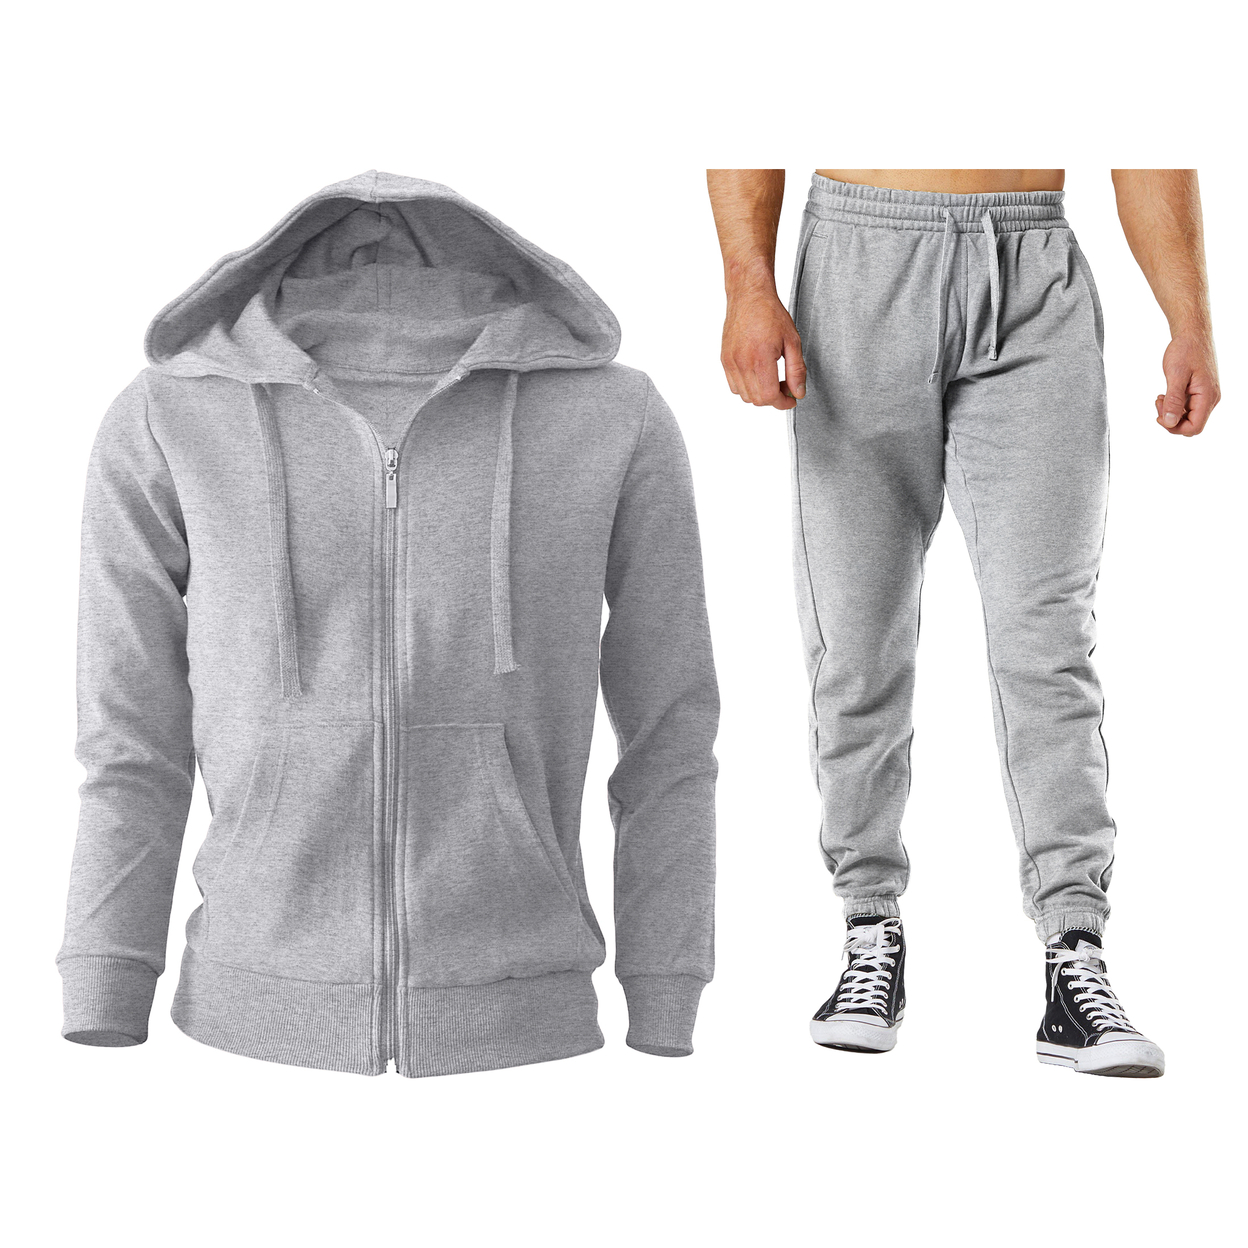 2/4-Piece: Men's Winter Warm Cozy Athletic Multi-Pockets BIG & TALL Sweatsuit Set - Grey, 2, Large